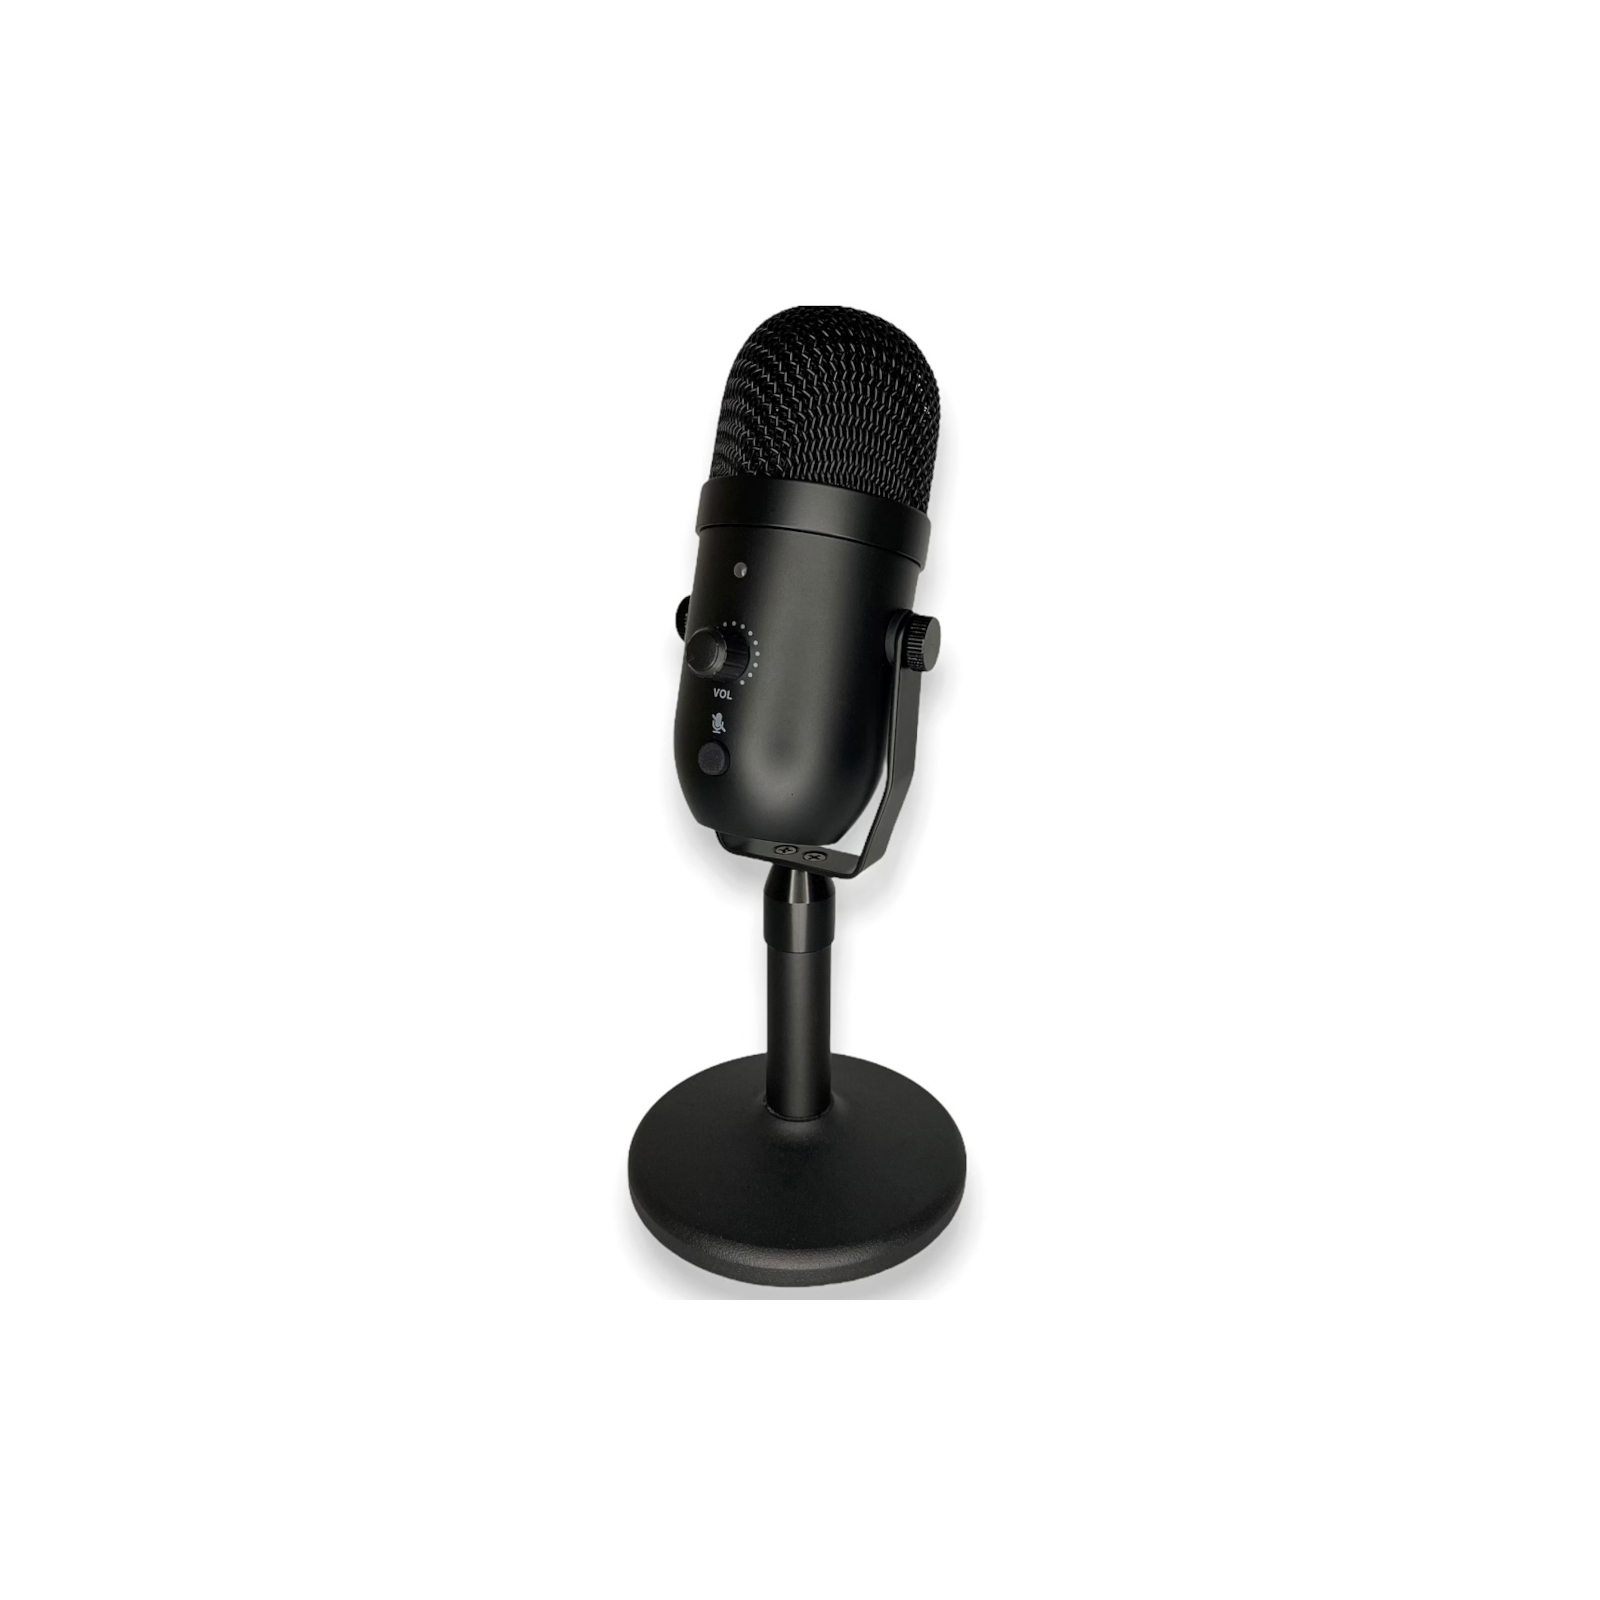 Микрофон GamePro SM1258 USB Black (SM1258)